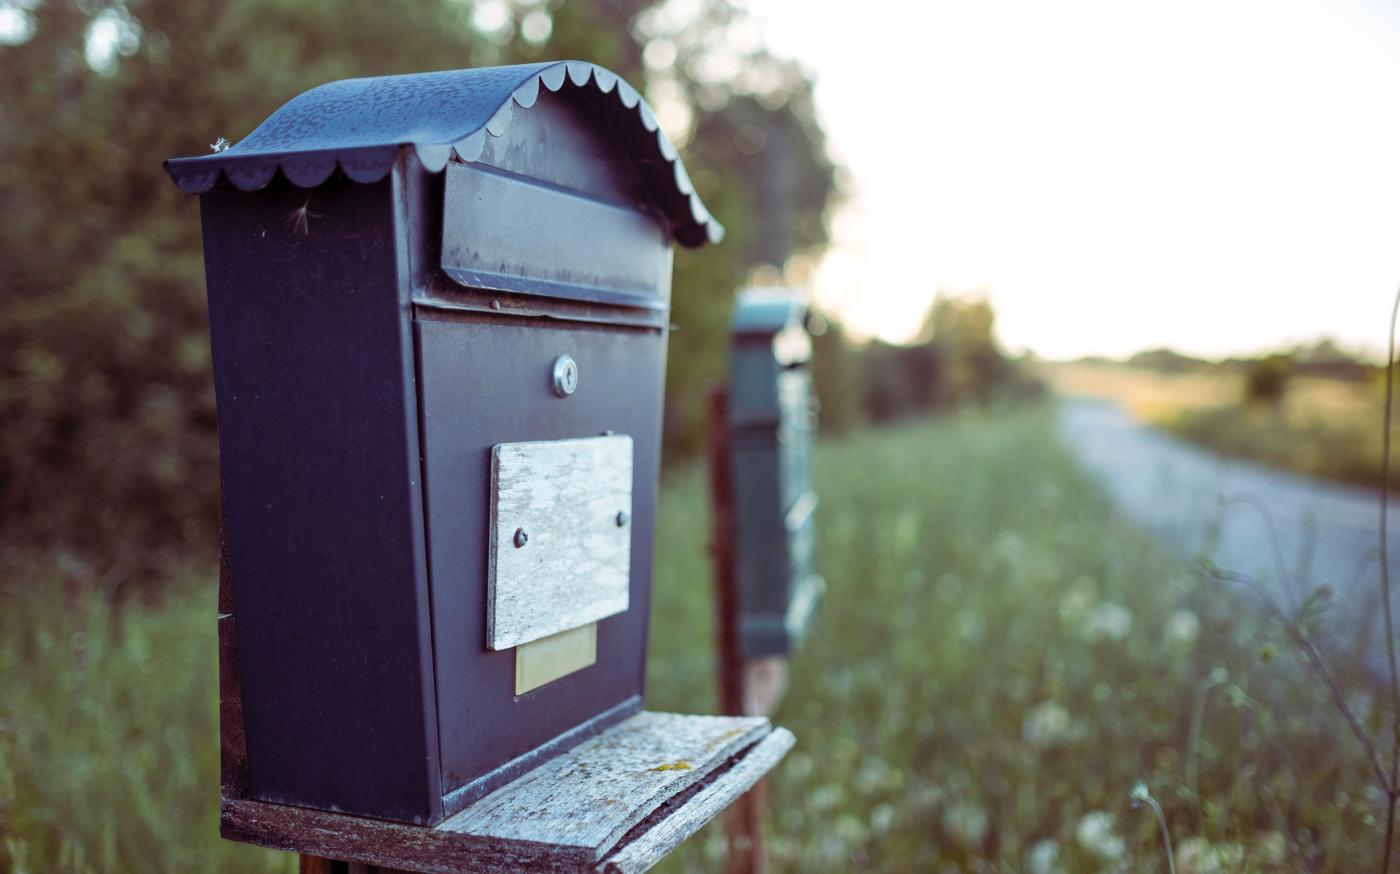 black mail box by Davide Baraldi courtesy of Unsplash.